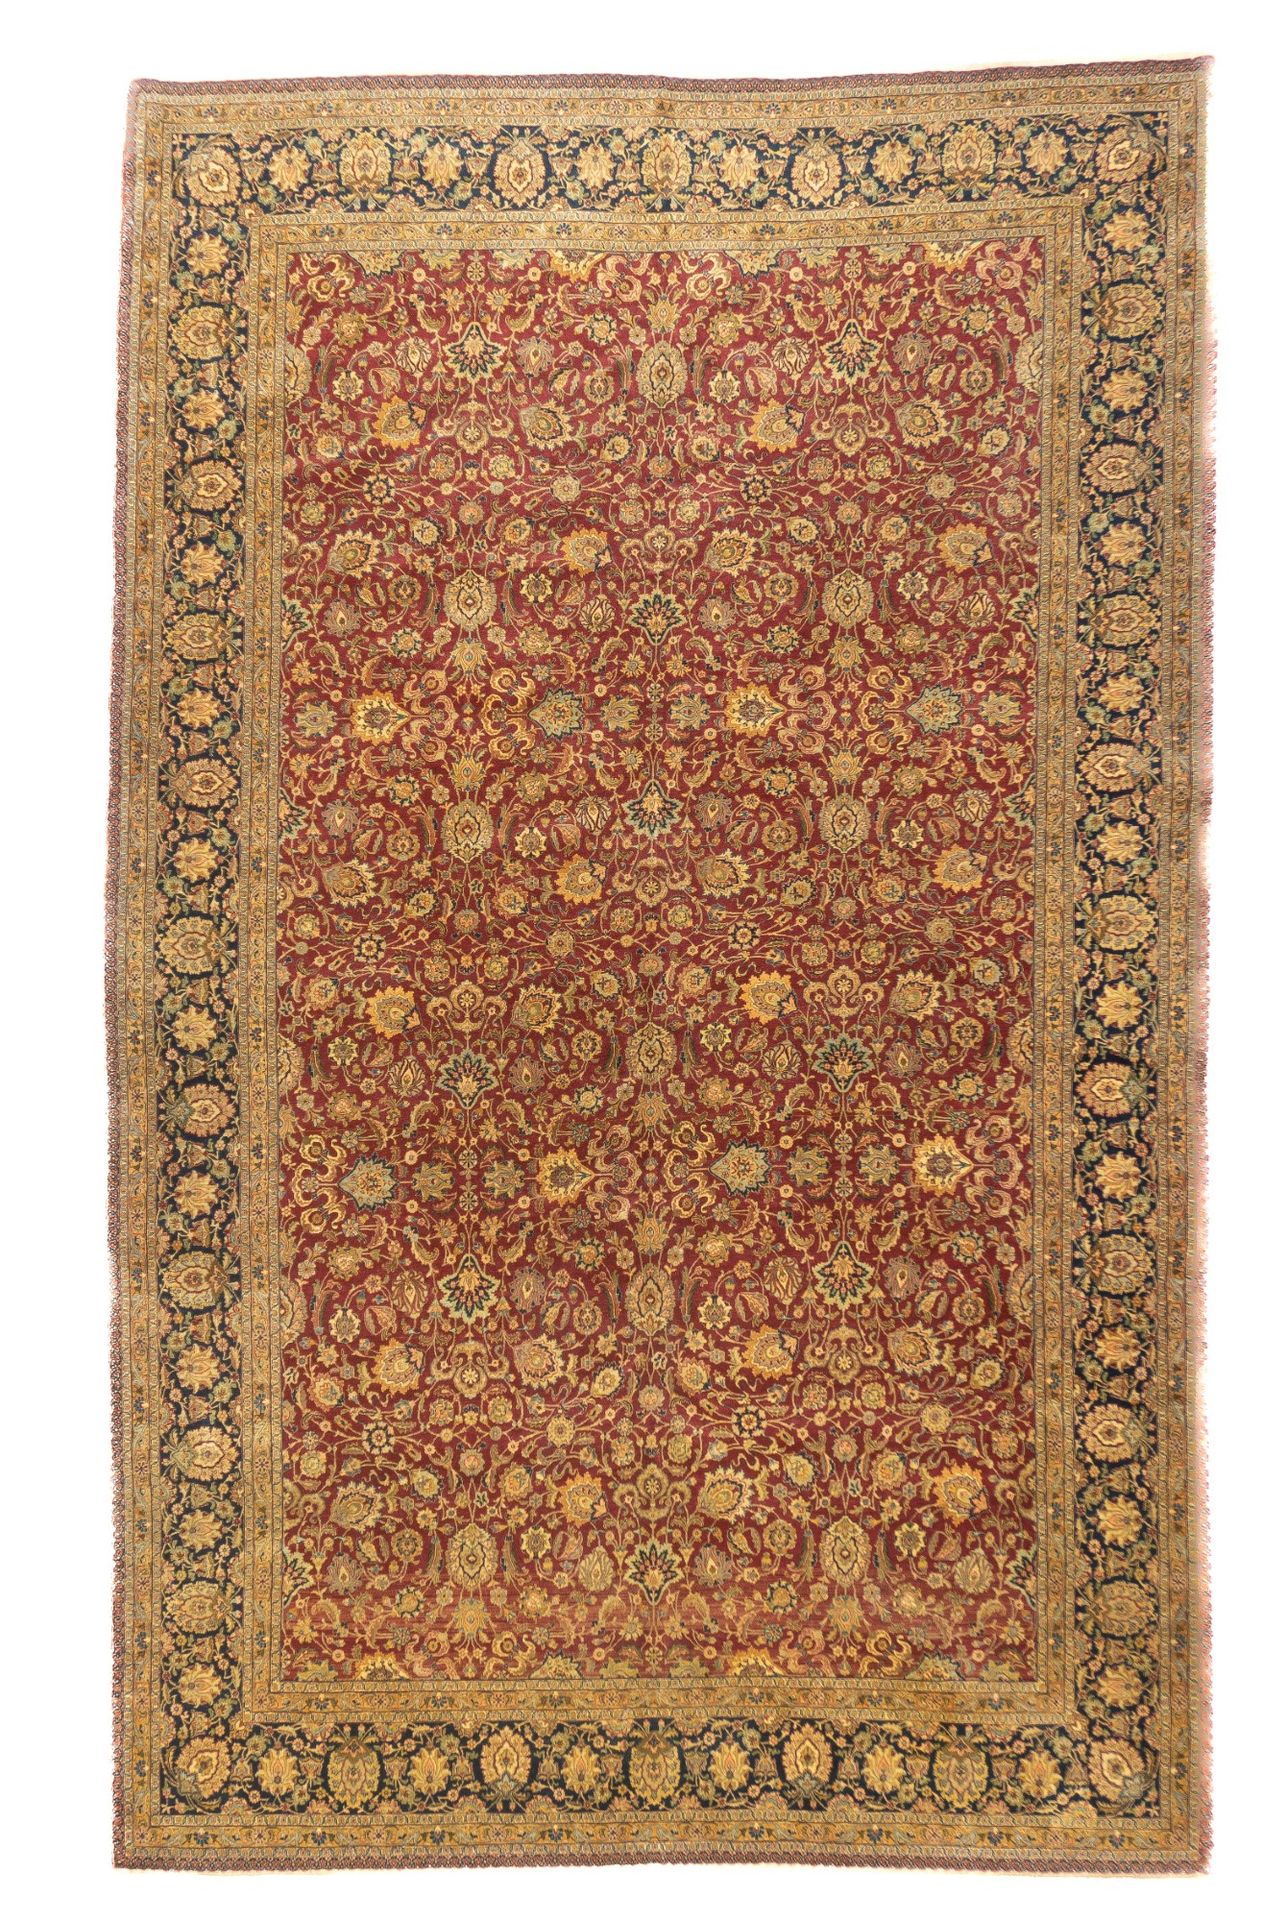 Null Antique Kashan Rug, 6'5" x 10'6" ( 1.96 x 3.20 M )